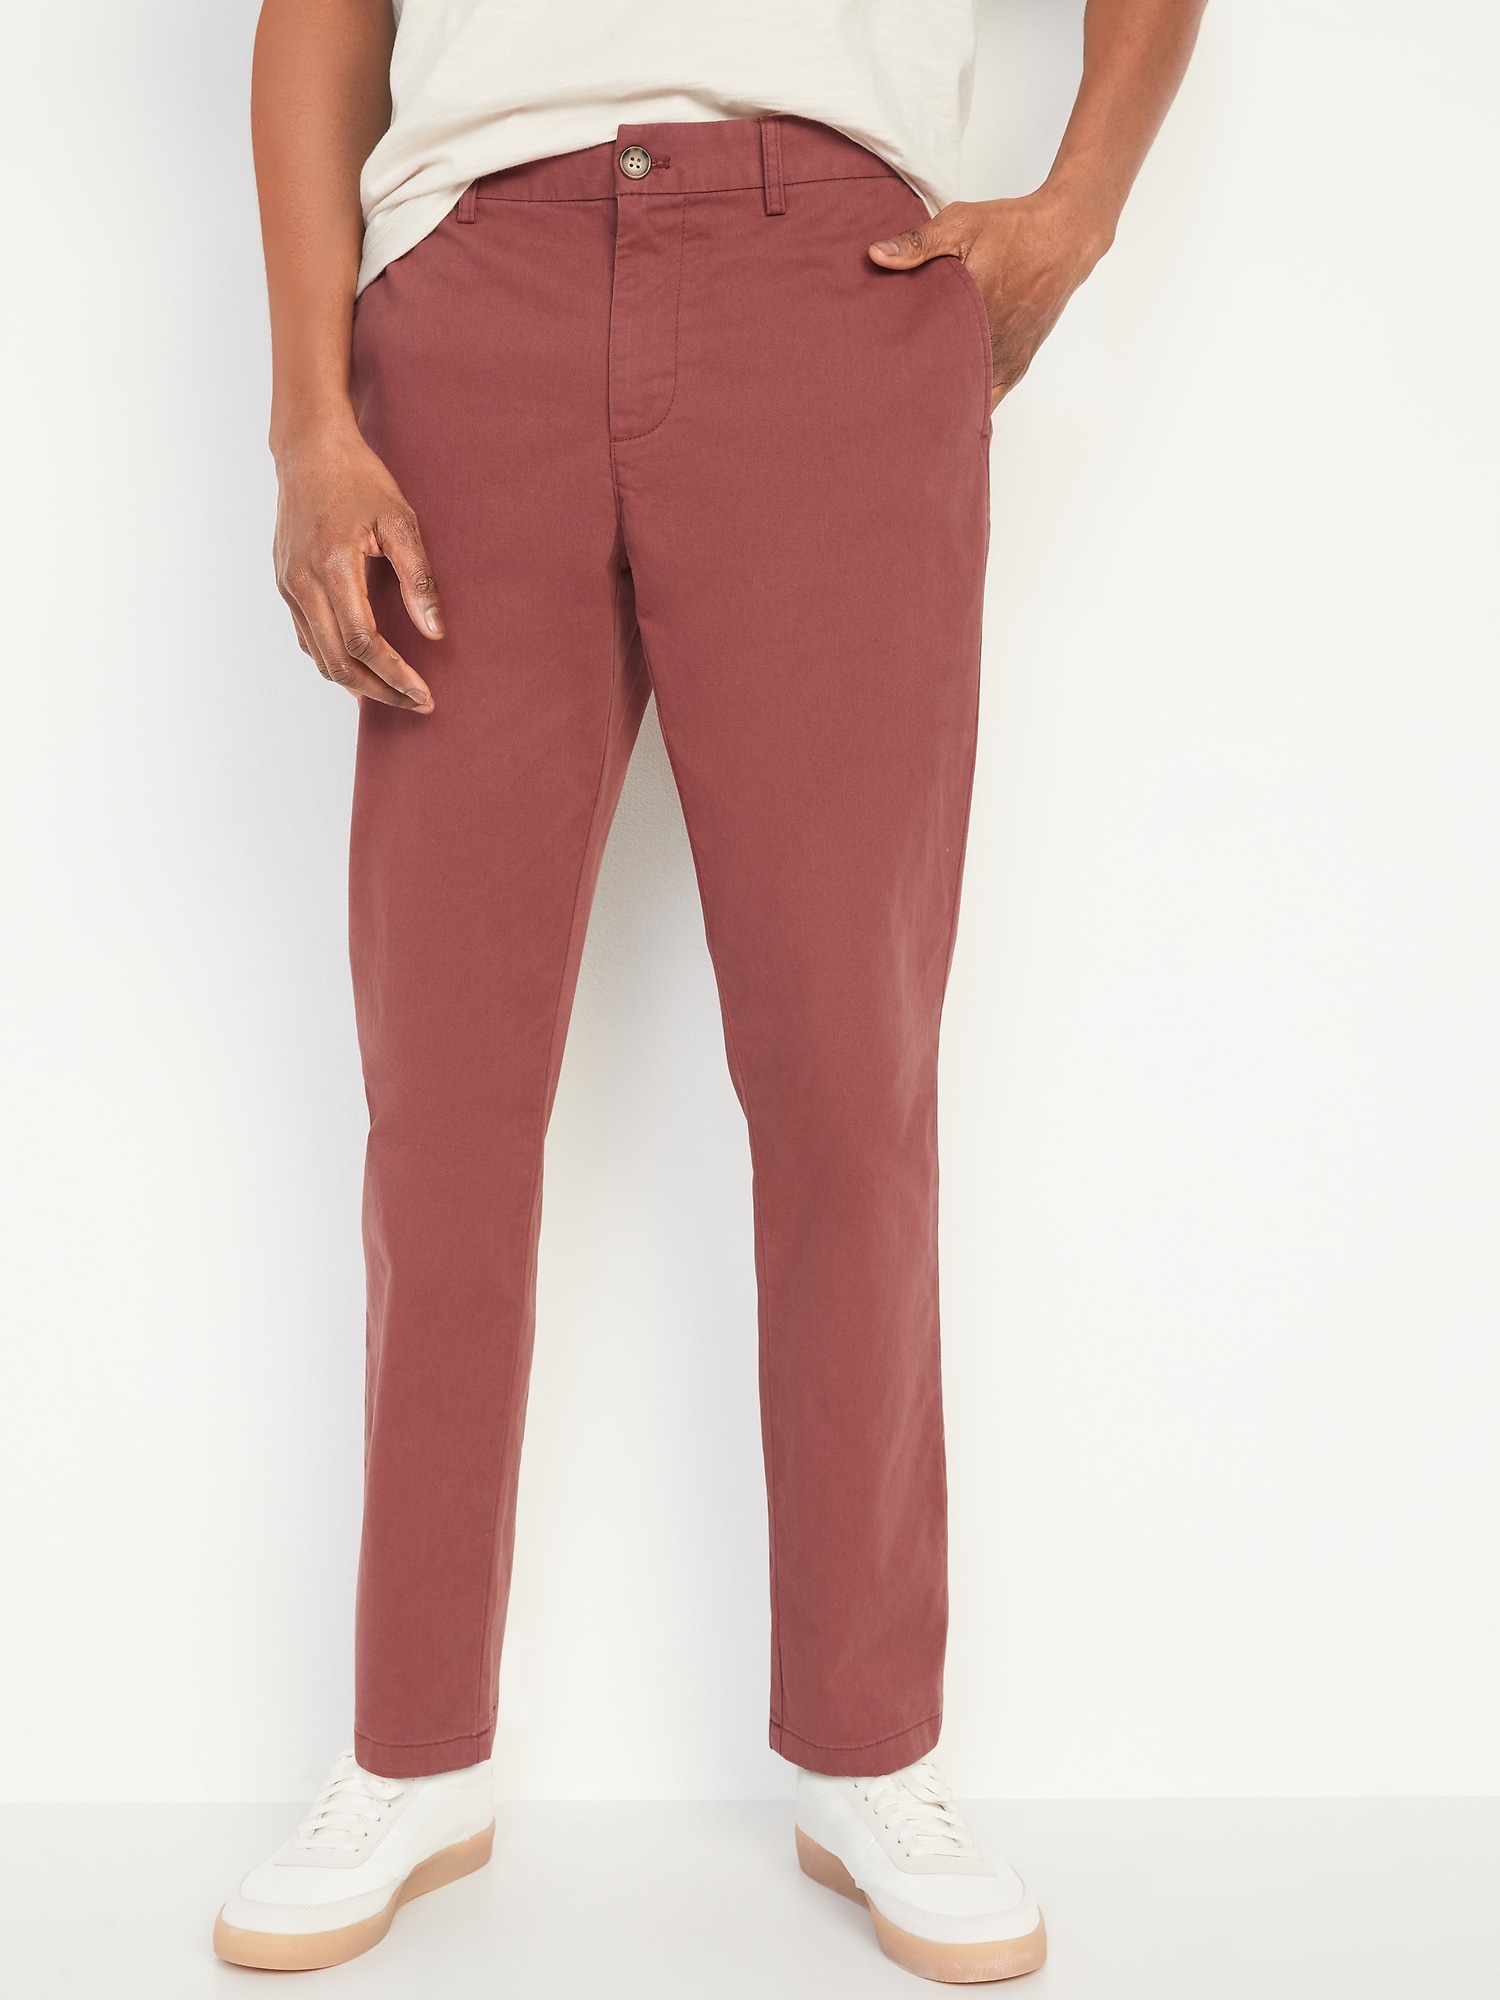 Buy STOP Maroon Women's Slim Fit Solid Stretch Pants